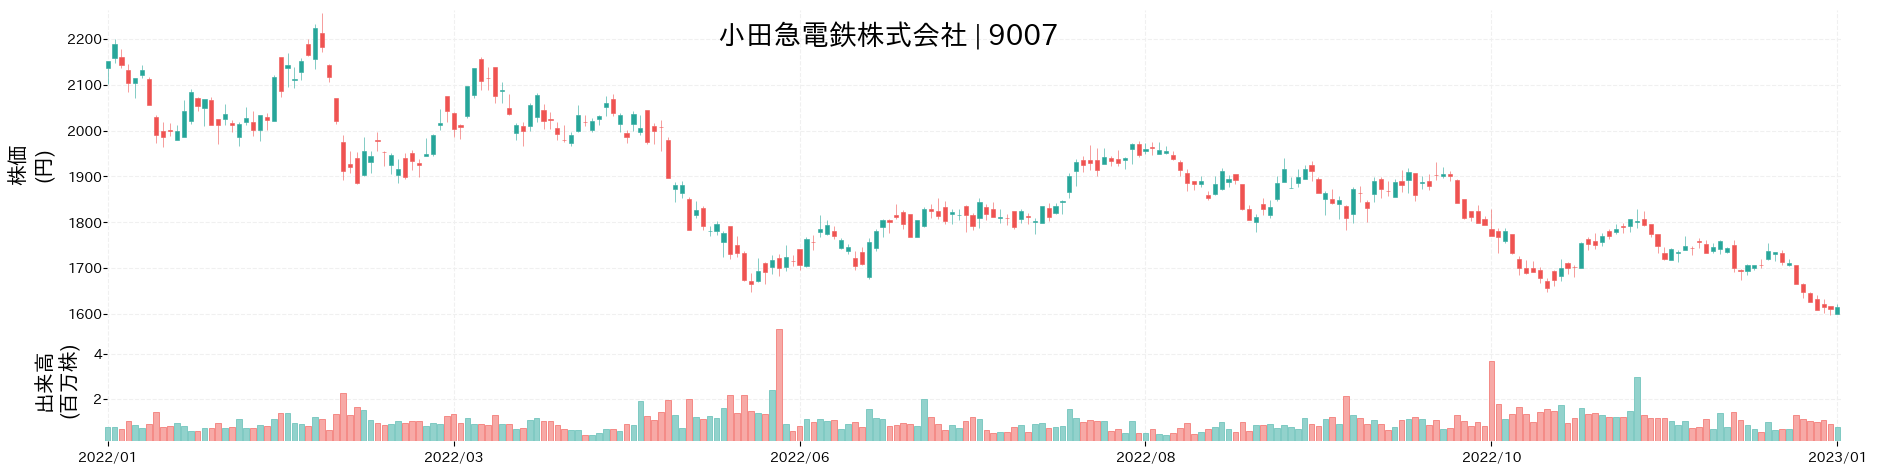 小田急電鉄の株価推移(2022)